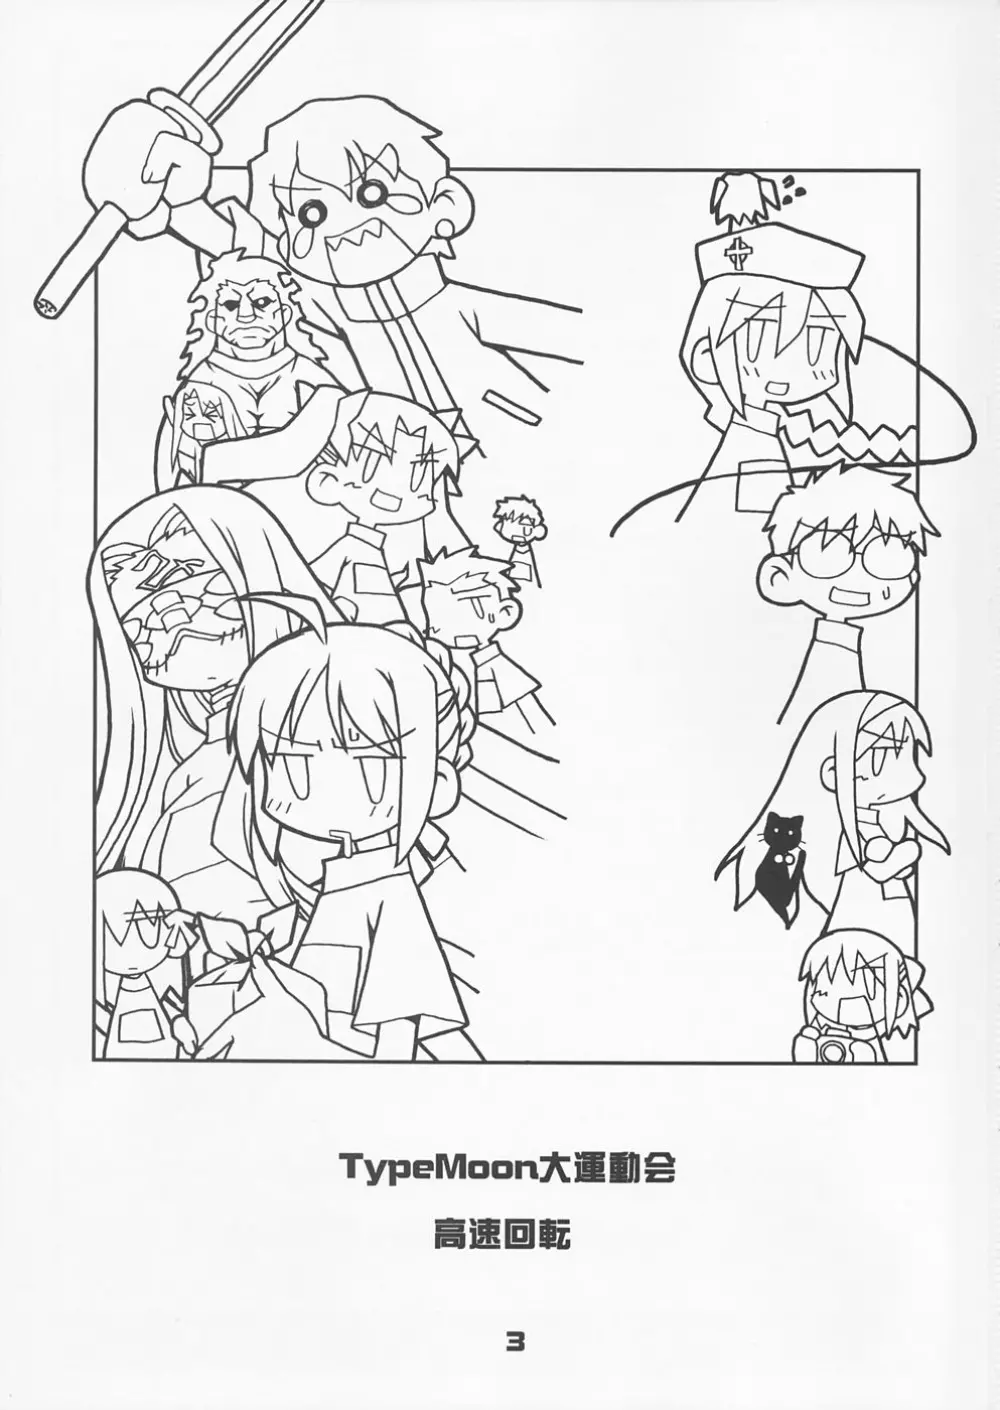 TypeMoon大運動会 - page2